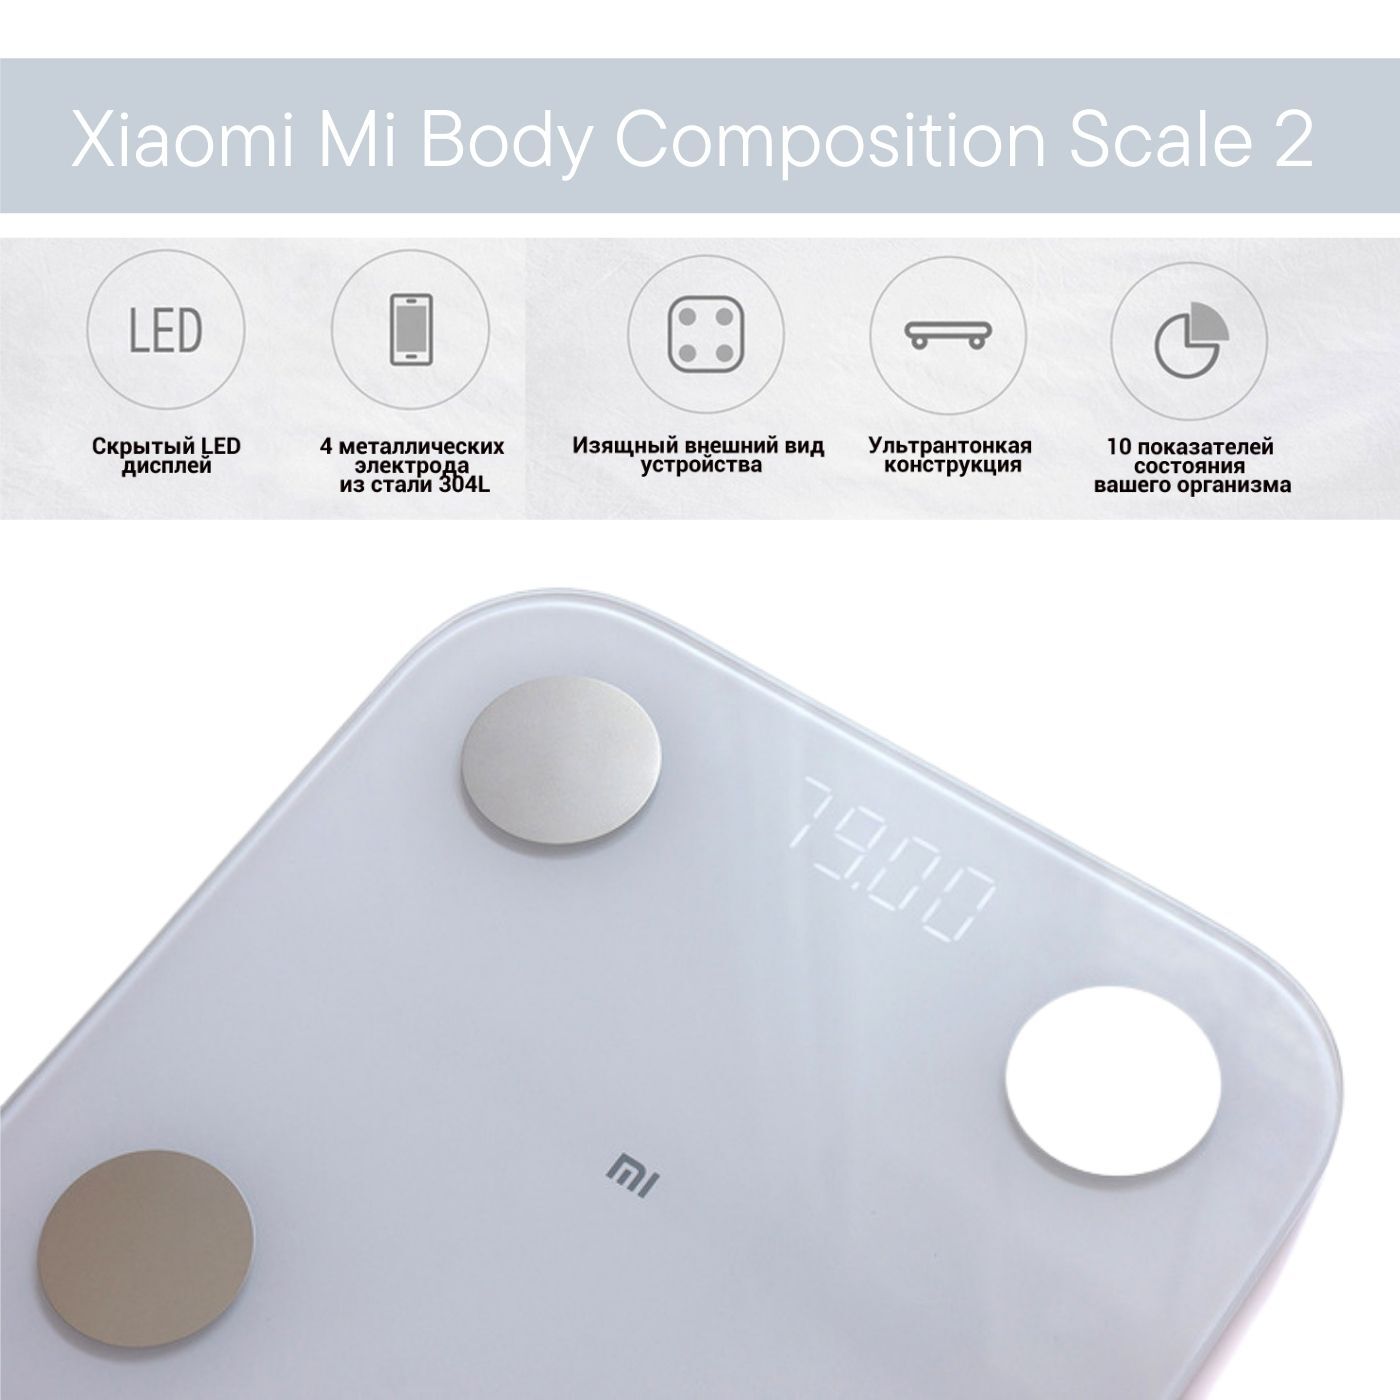 Весы xiaomi mi body composition купить. Умные весы body Composition Scale 2. Весы Xiaomi mi body Composition. Xiaomi mi body Composition Scale 2. Весы Xiaomi mi body Composition Scale 2 белый.